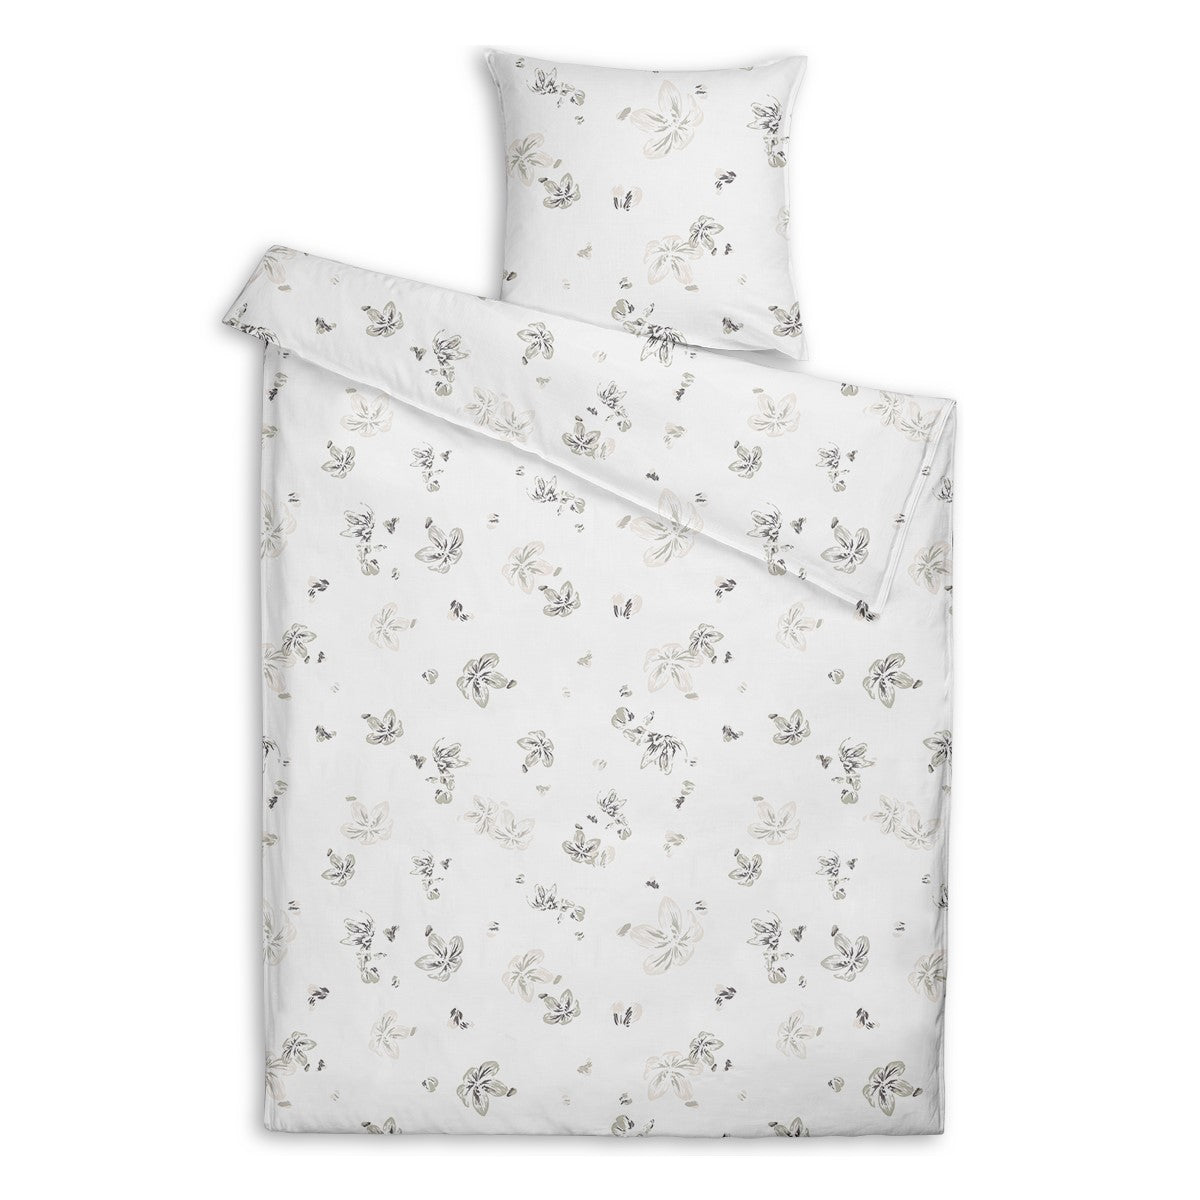 Bæk og bølge sengetøj – Kirsebær Beige 140x200 cm